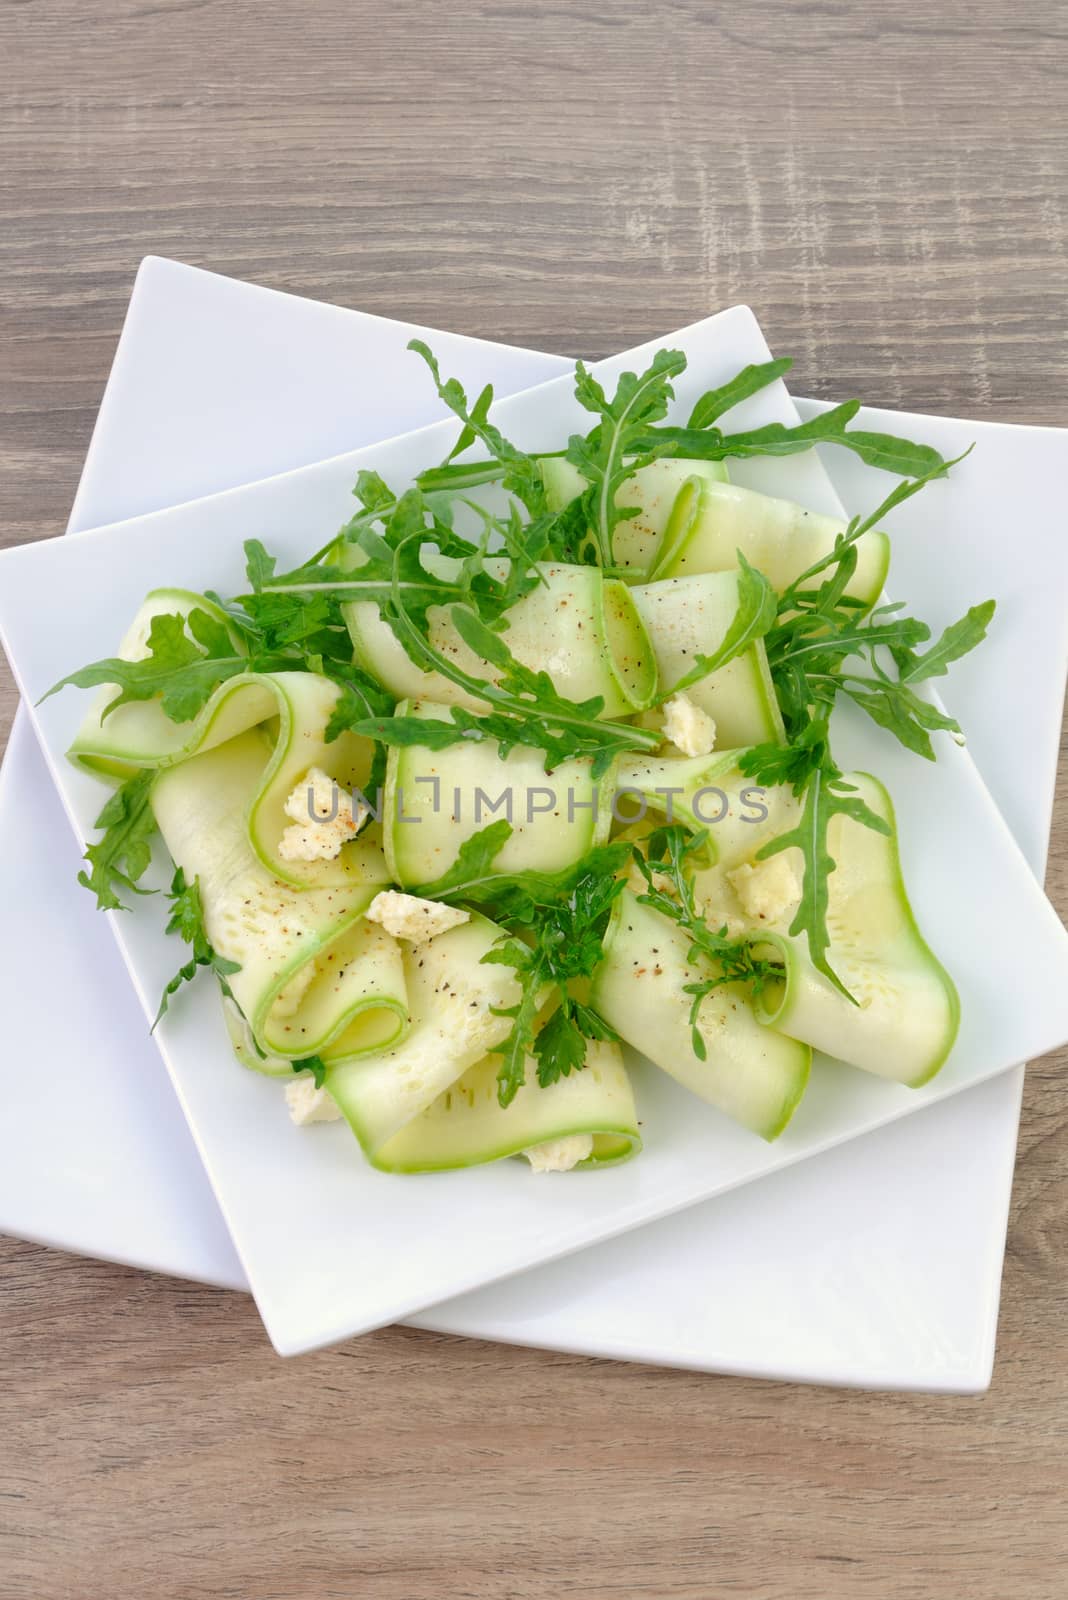 Zucchini salad with arugula and feta by Apolonia